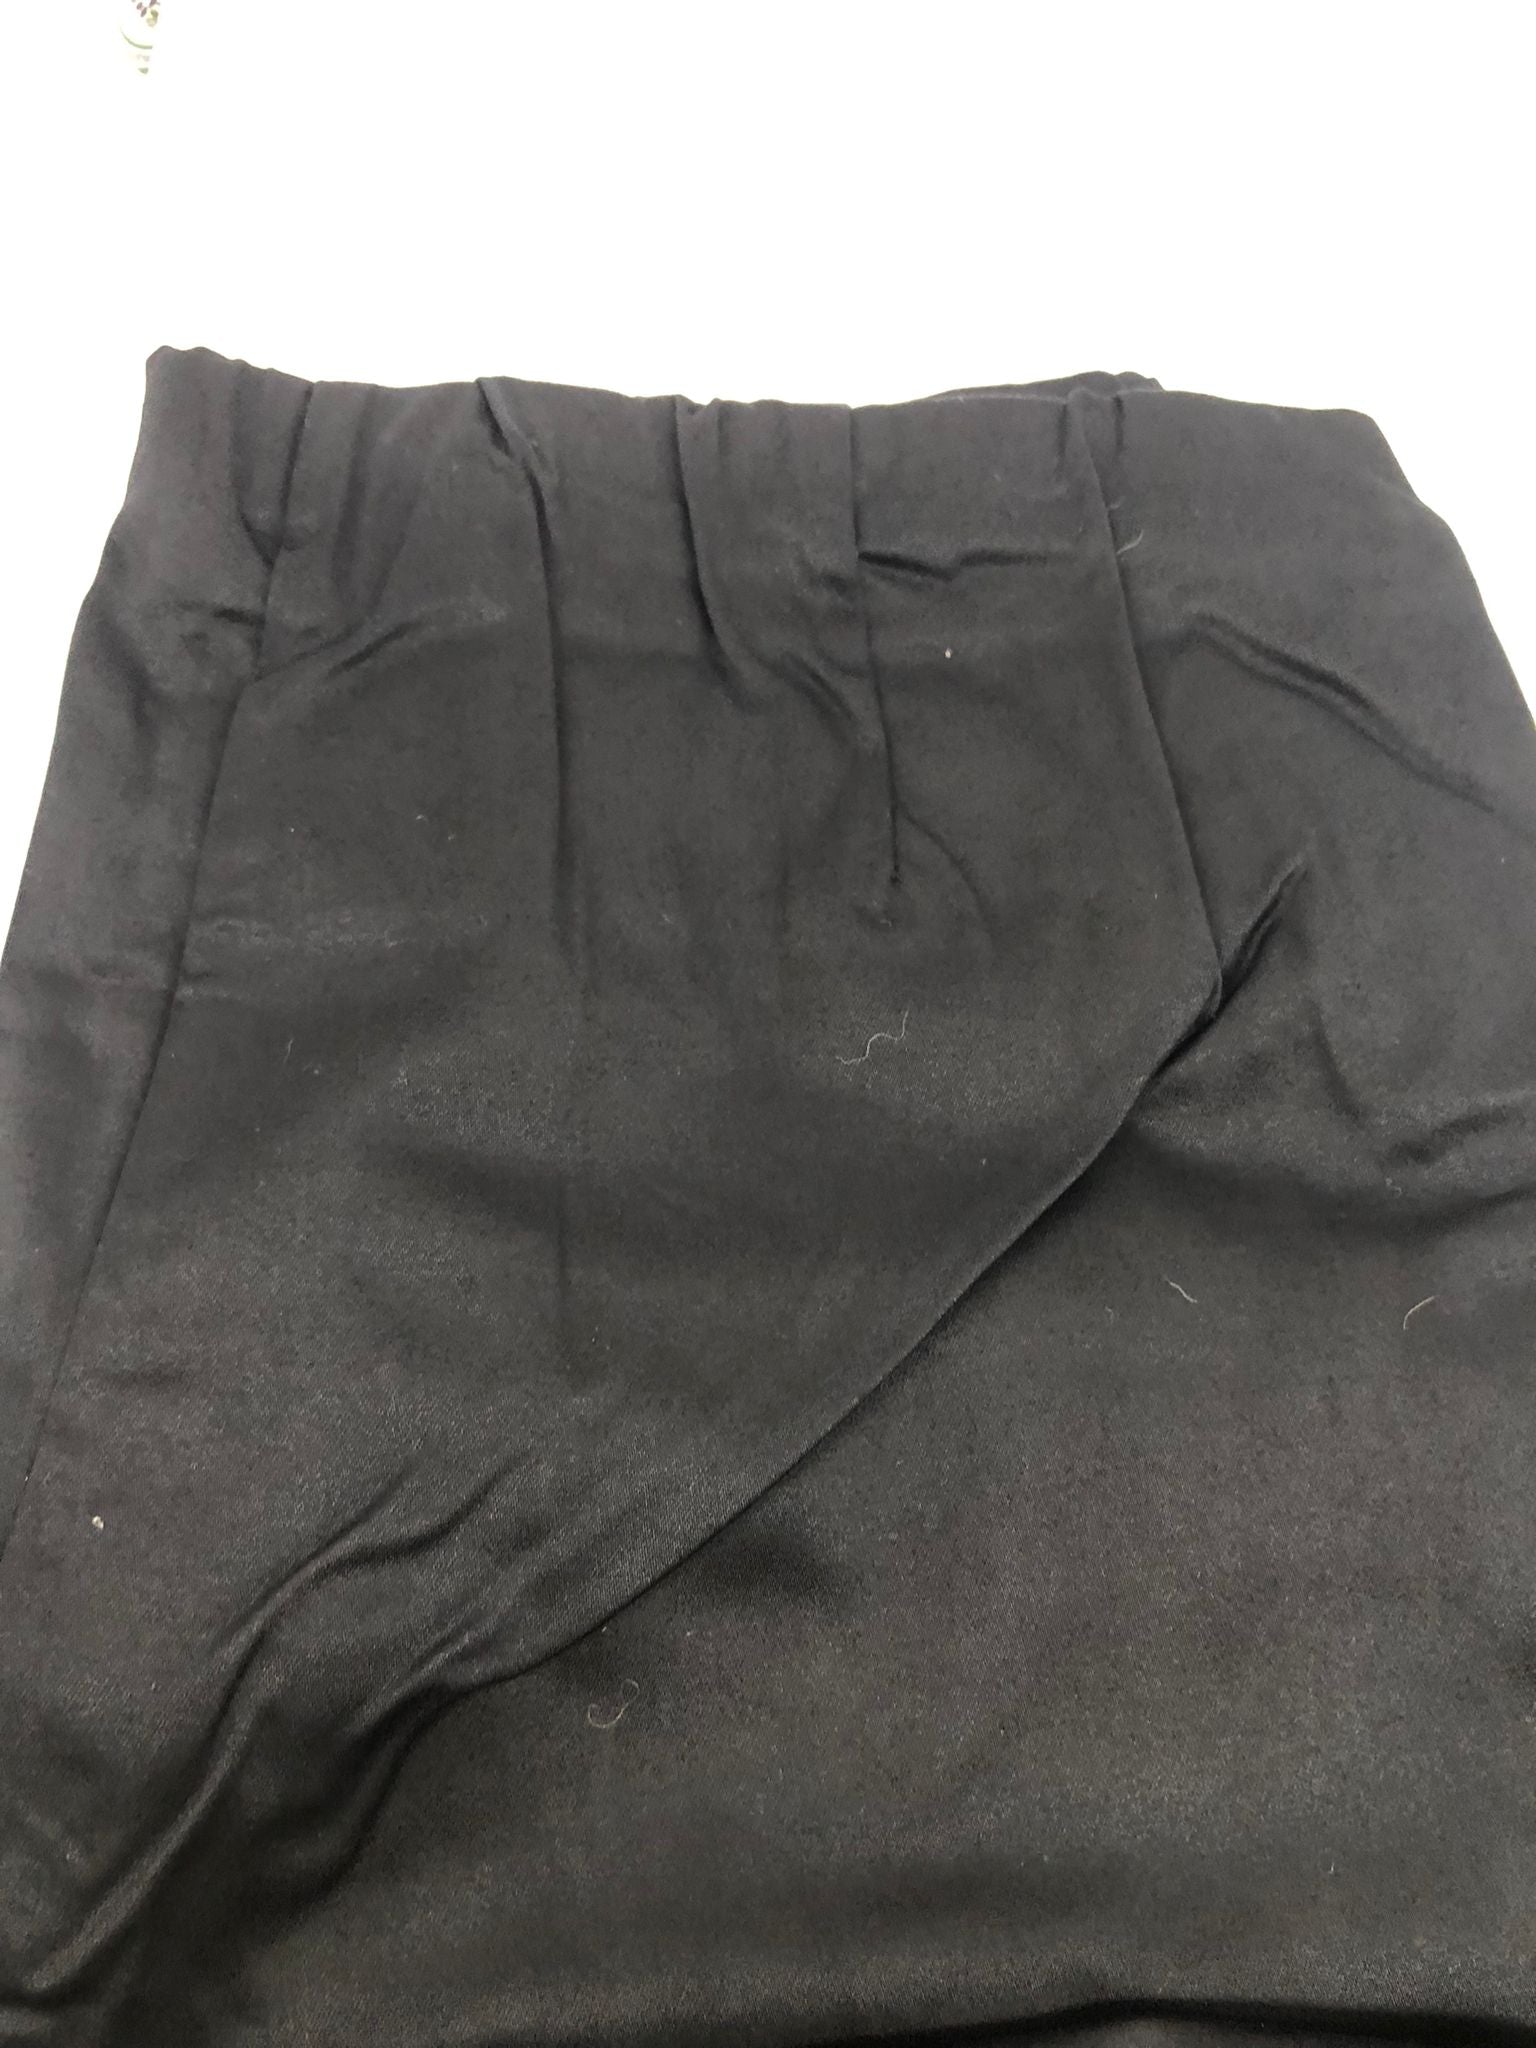 C. Wonder Regular Cotton Sateen Crop Pants with Hem Detail